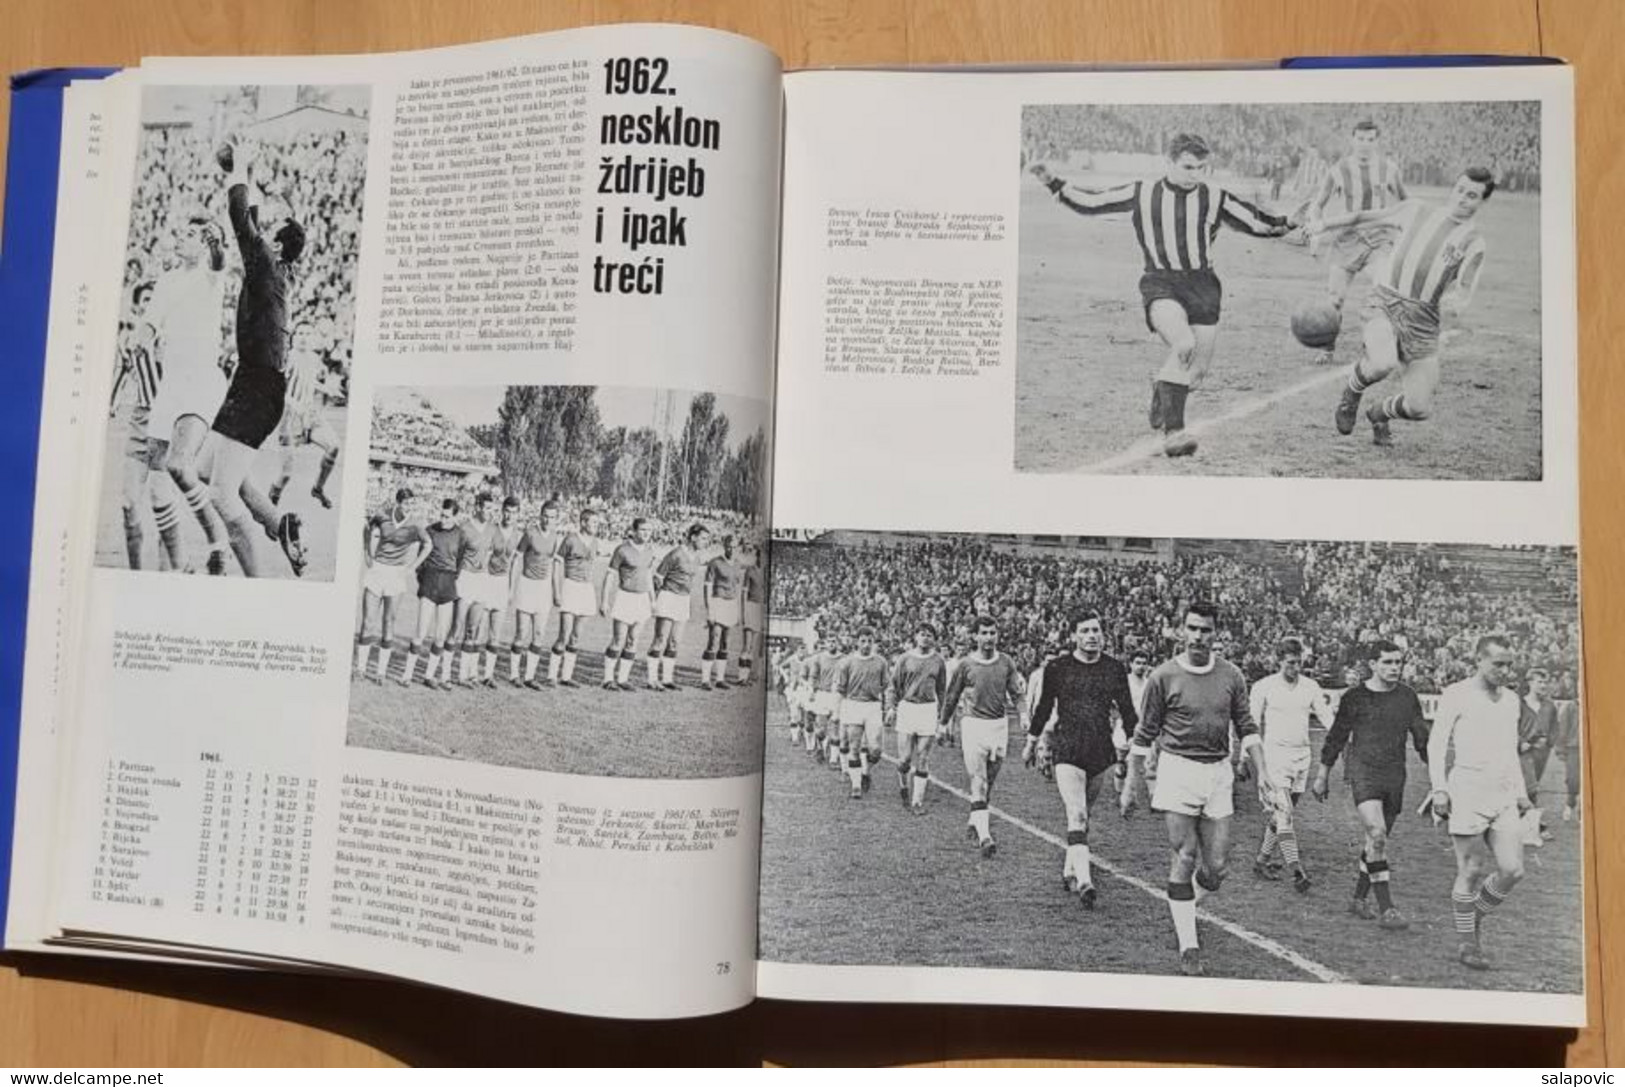 DINAMO ZAGREB 1945-1975 Fredi Kramera, Roman Garber, Zvonimir Magdić monografija football club Croatia, monograph